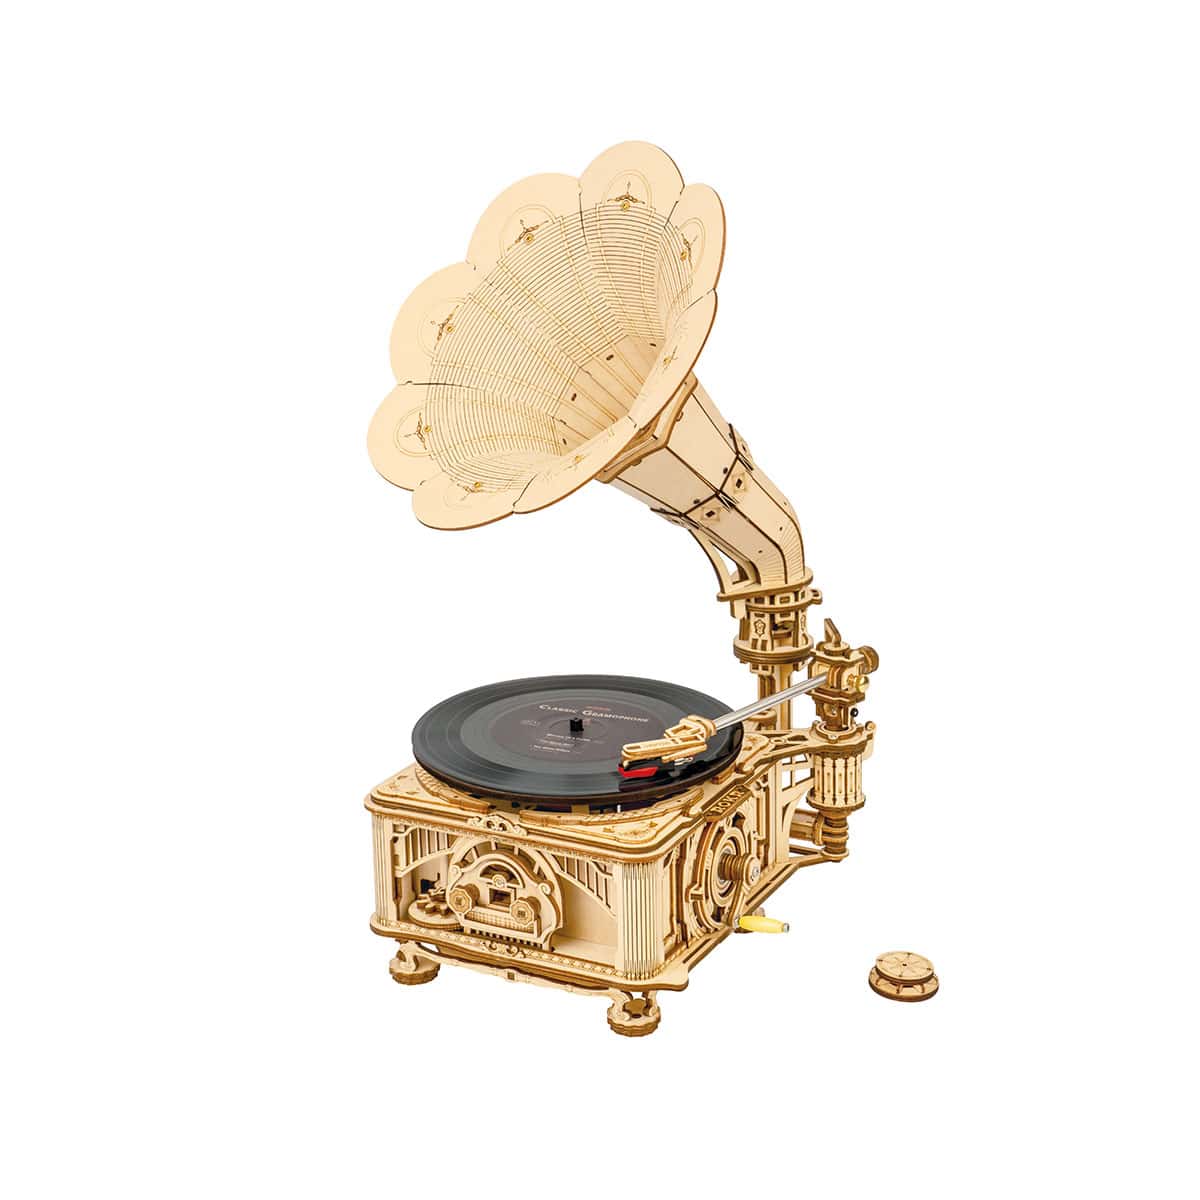 3D-Holzpuzzle "Retro Grammophon"